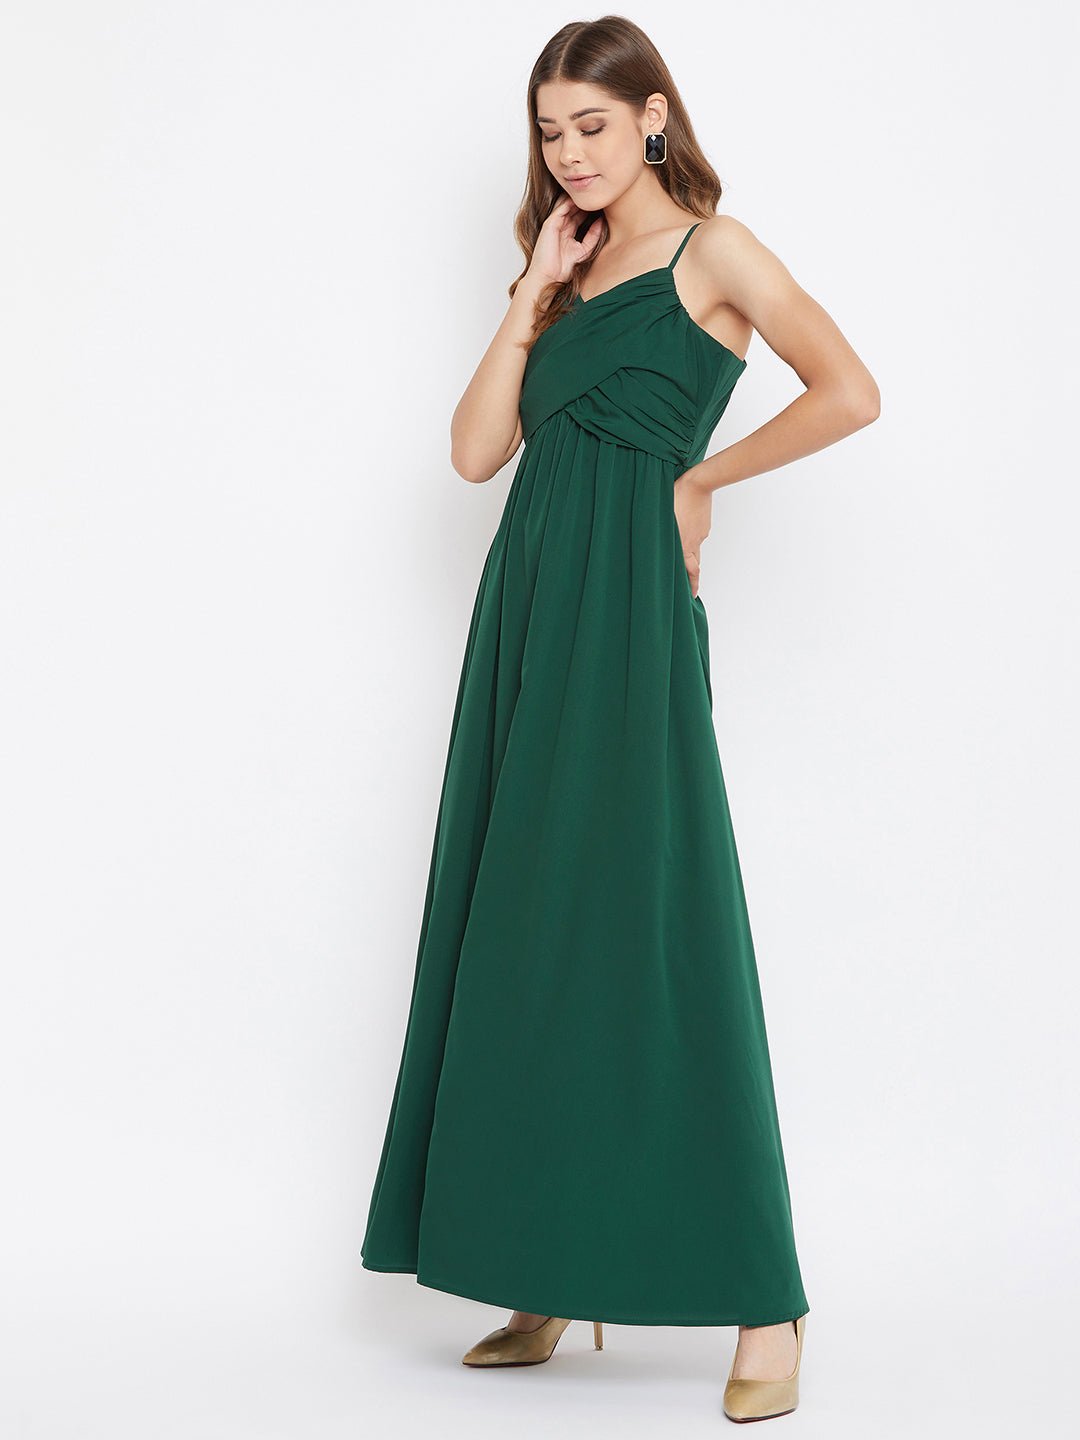 Folk Republic Women Solid Green V-Neck Sleeveless Ruched Maxi Dress - #folk republic#